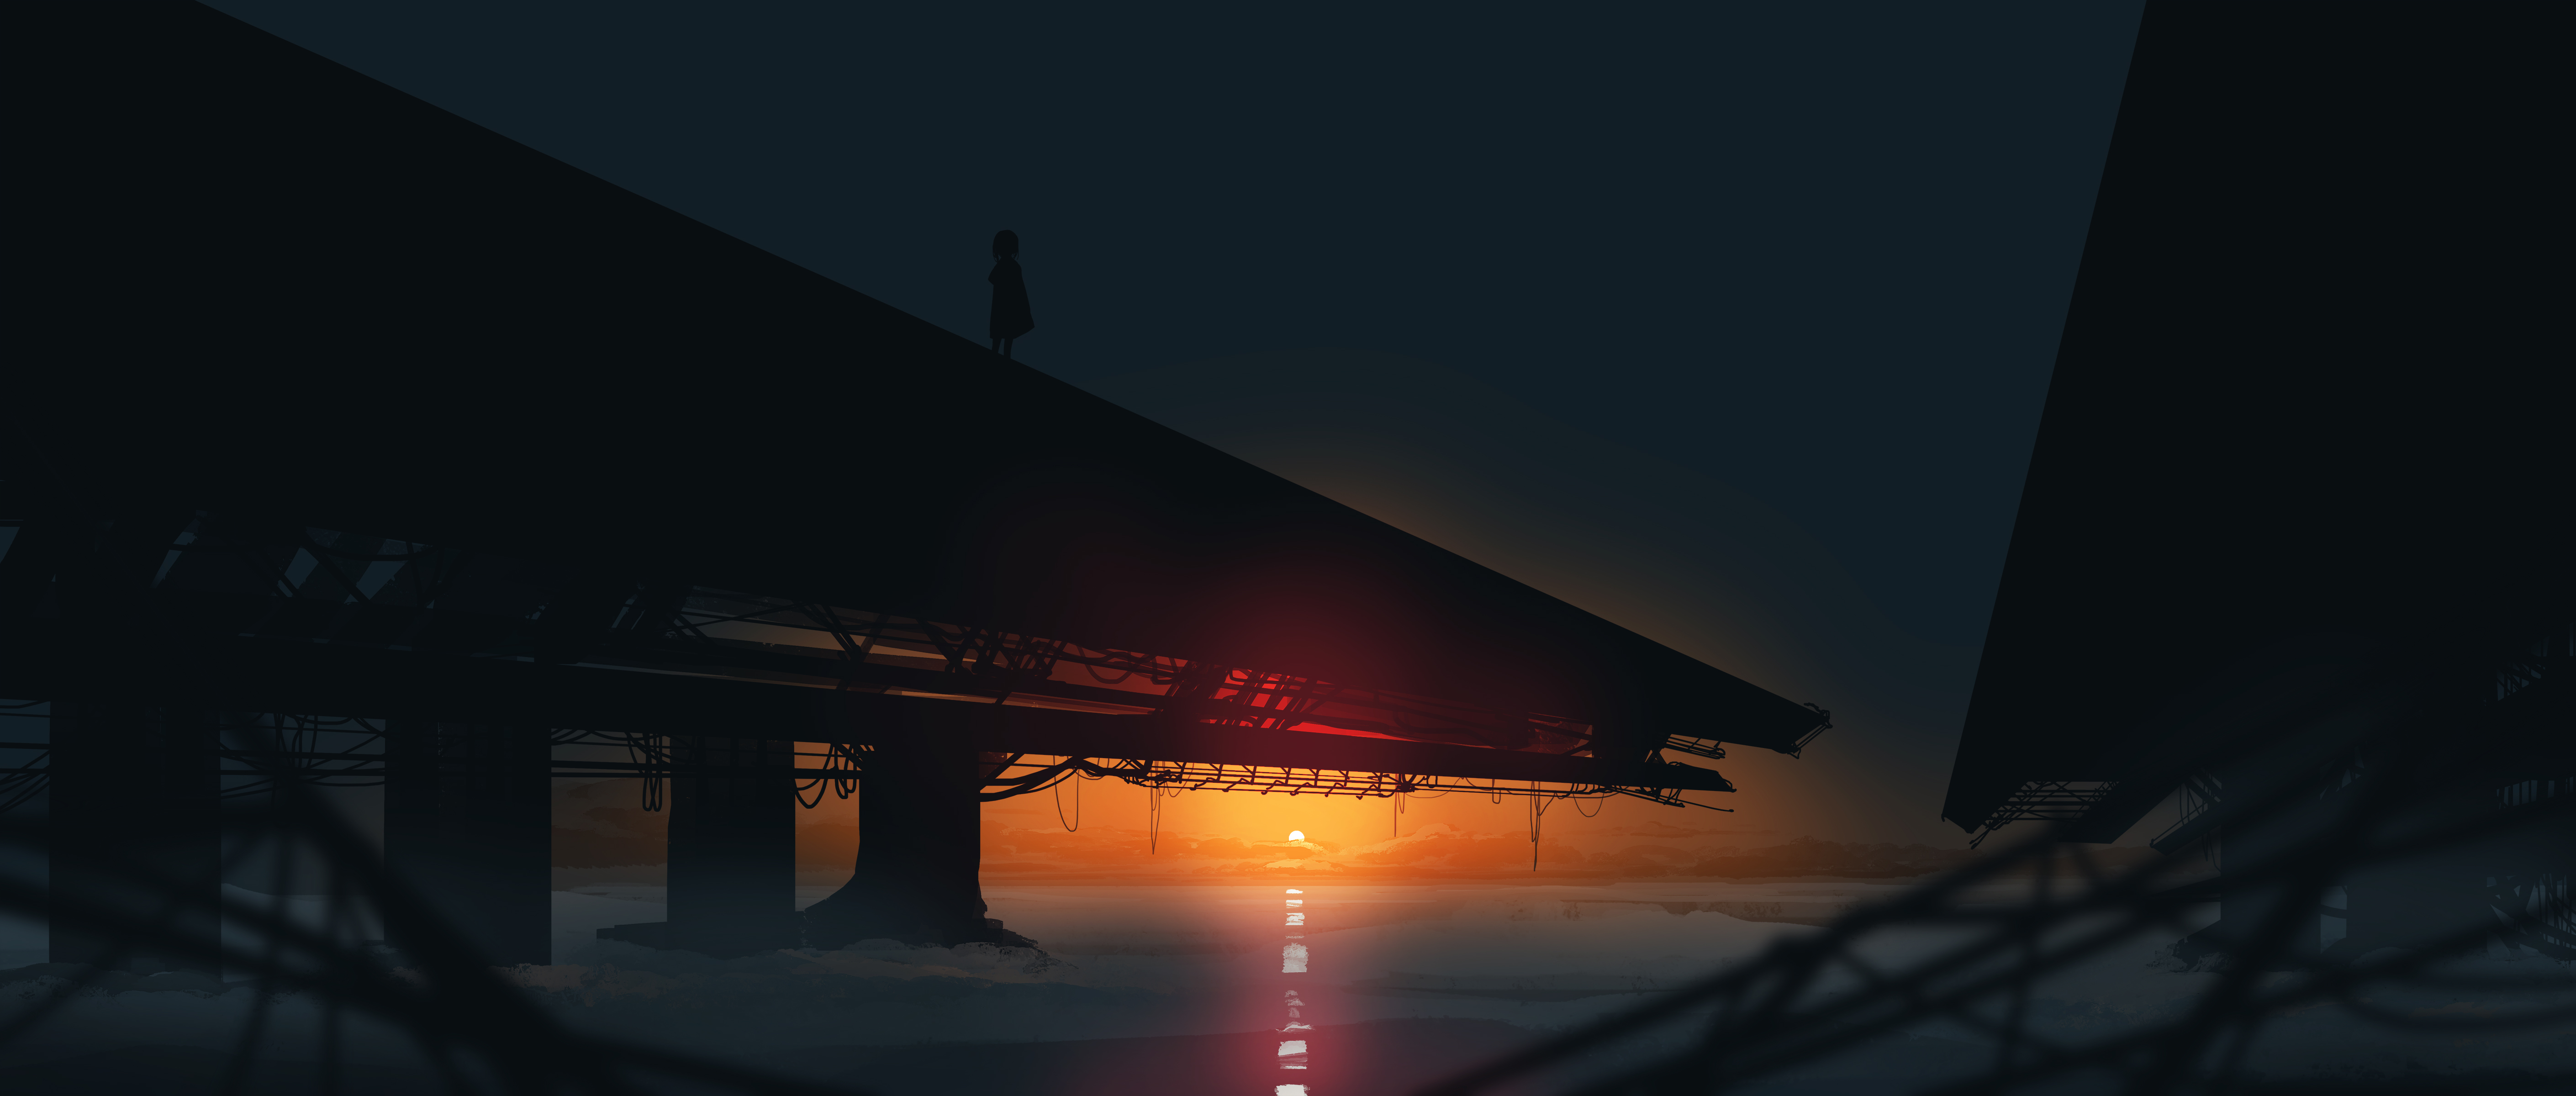 Gracile Digital Art Artwork Illustration Ultrawide Wide Screen Bridge Sun Sunset Structure Dark Clou 5640x2400